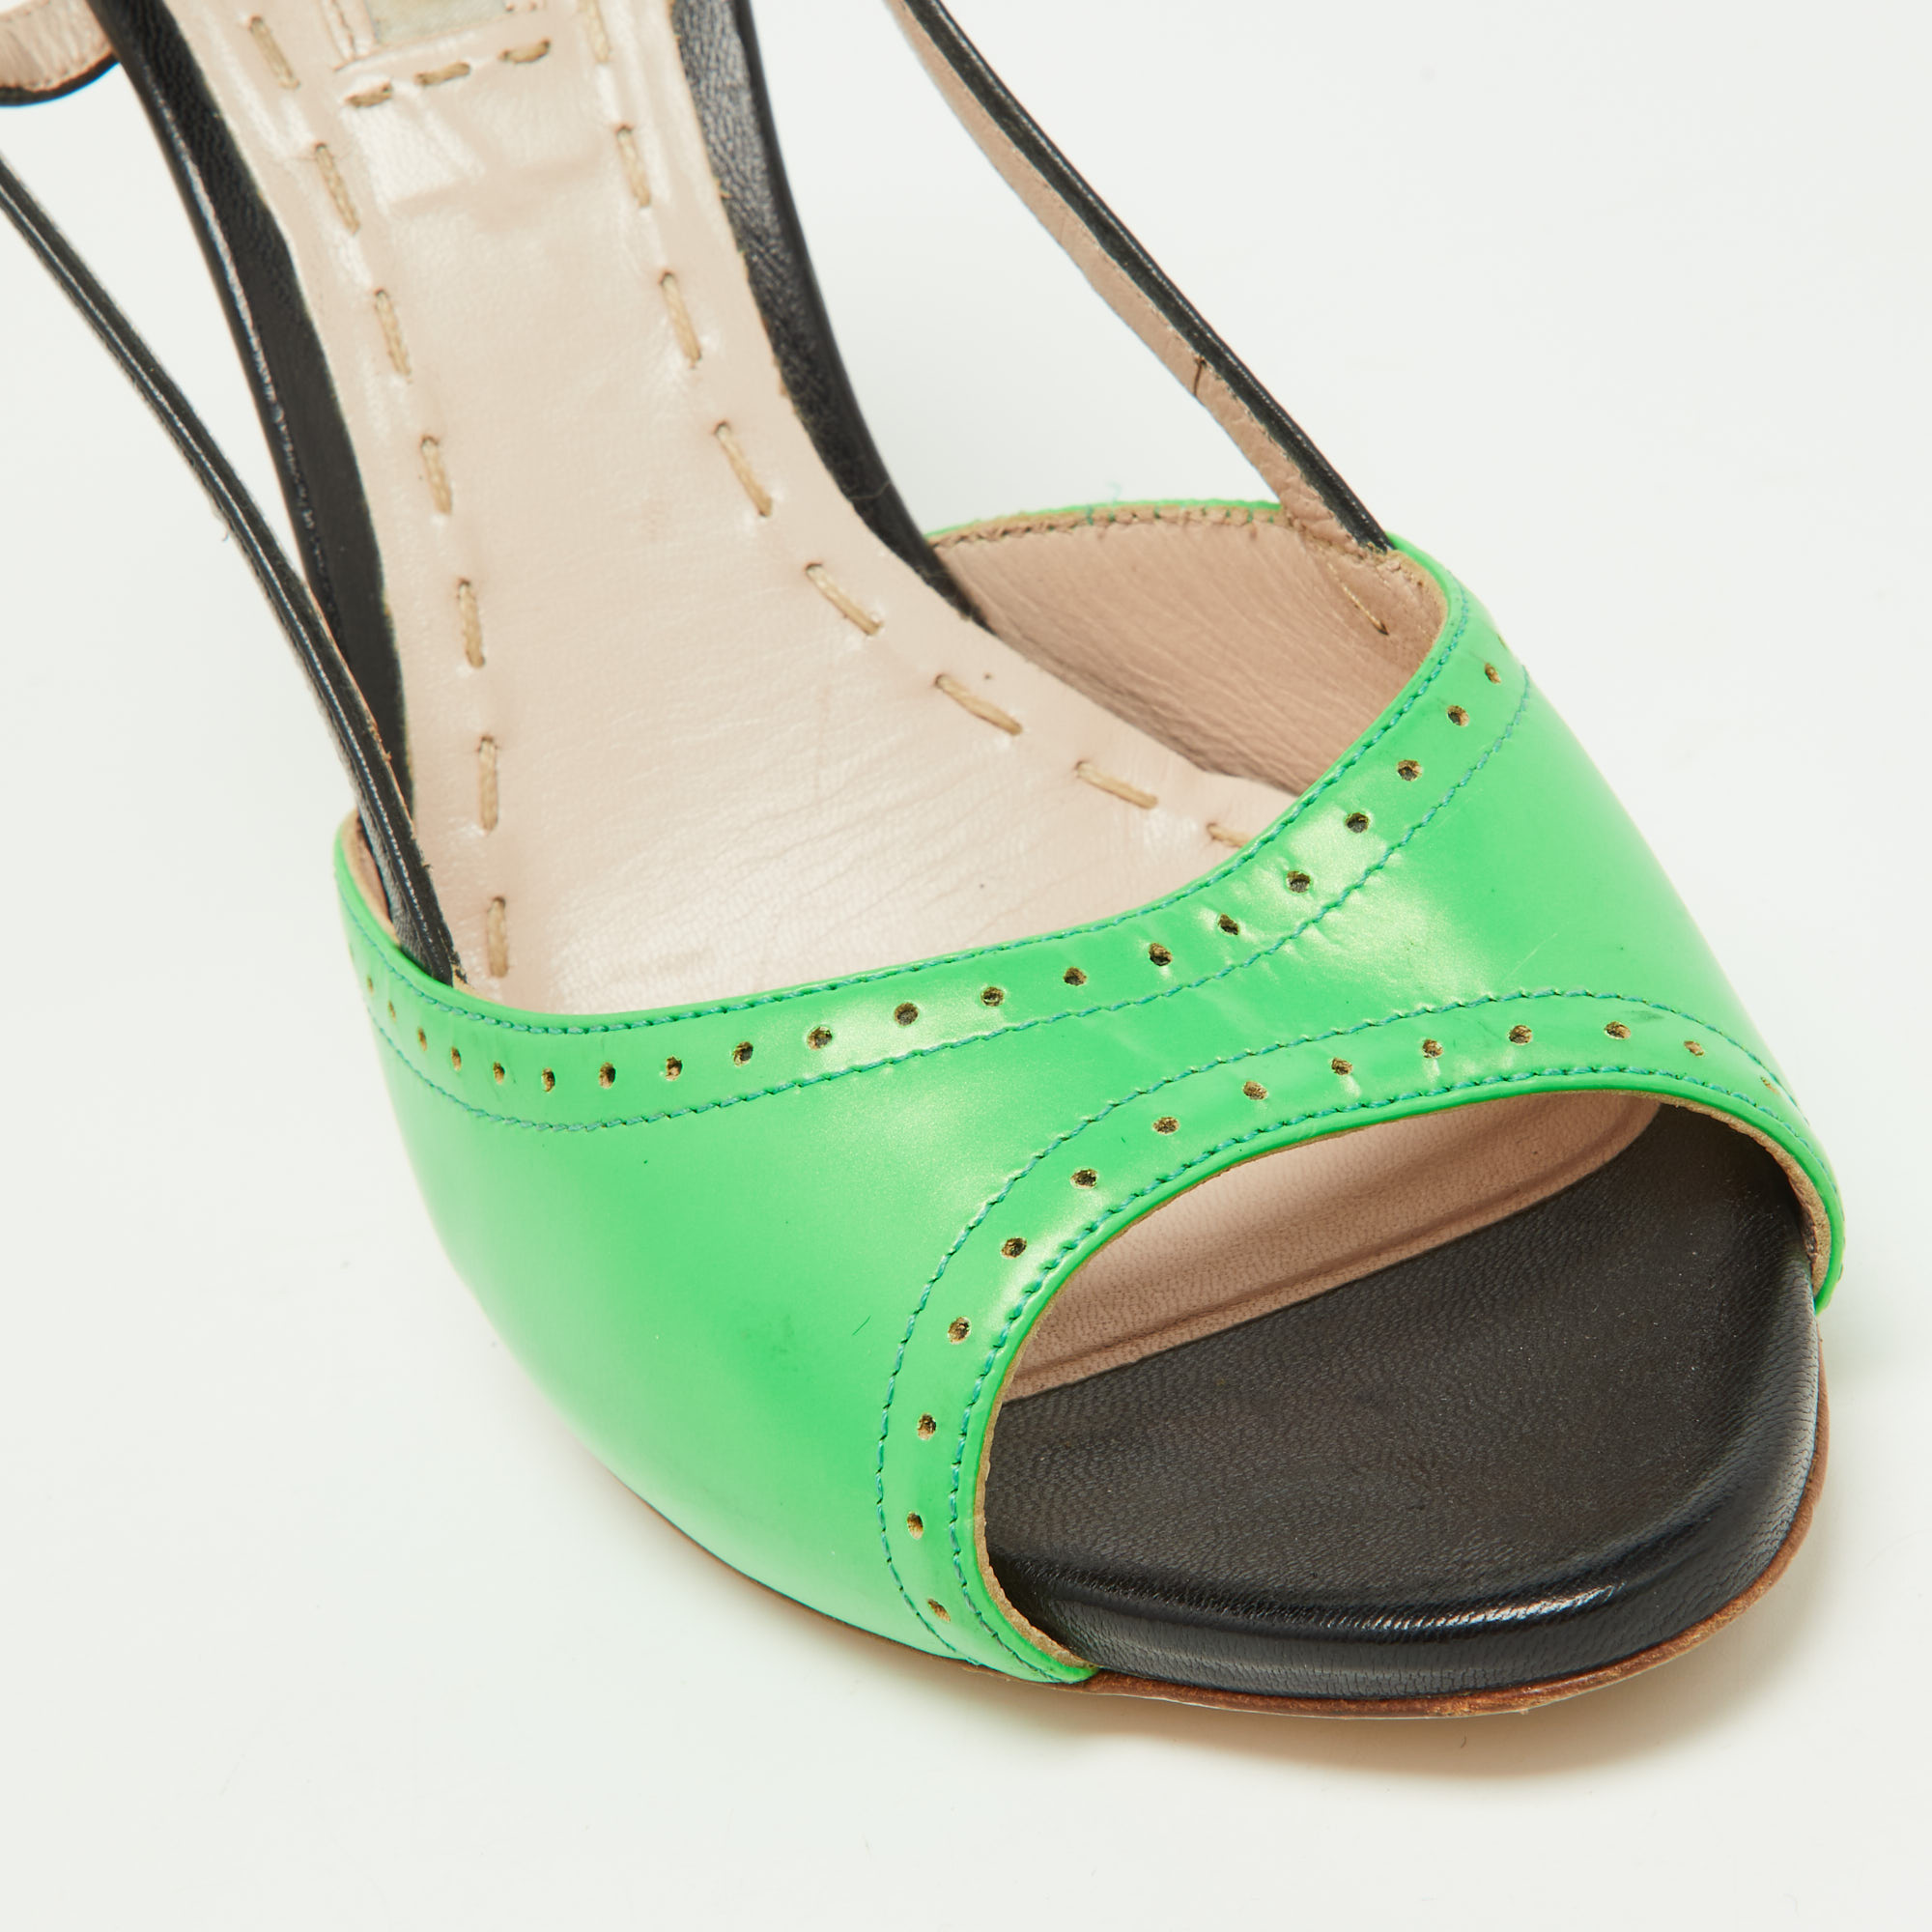 Miu Miu Green/Black Leather Slingback Peep Toe Sandals Size 37.5